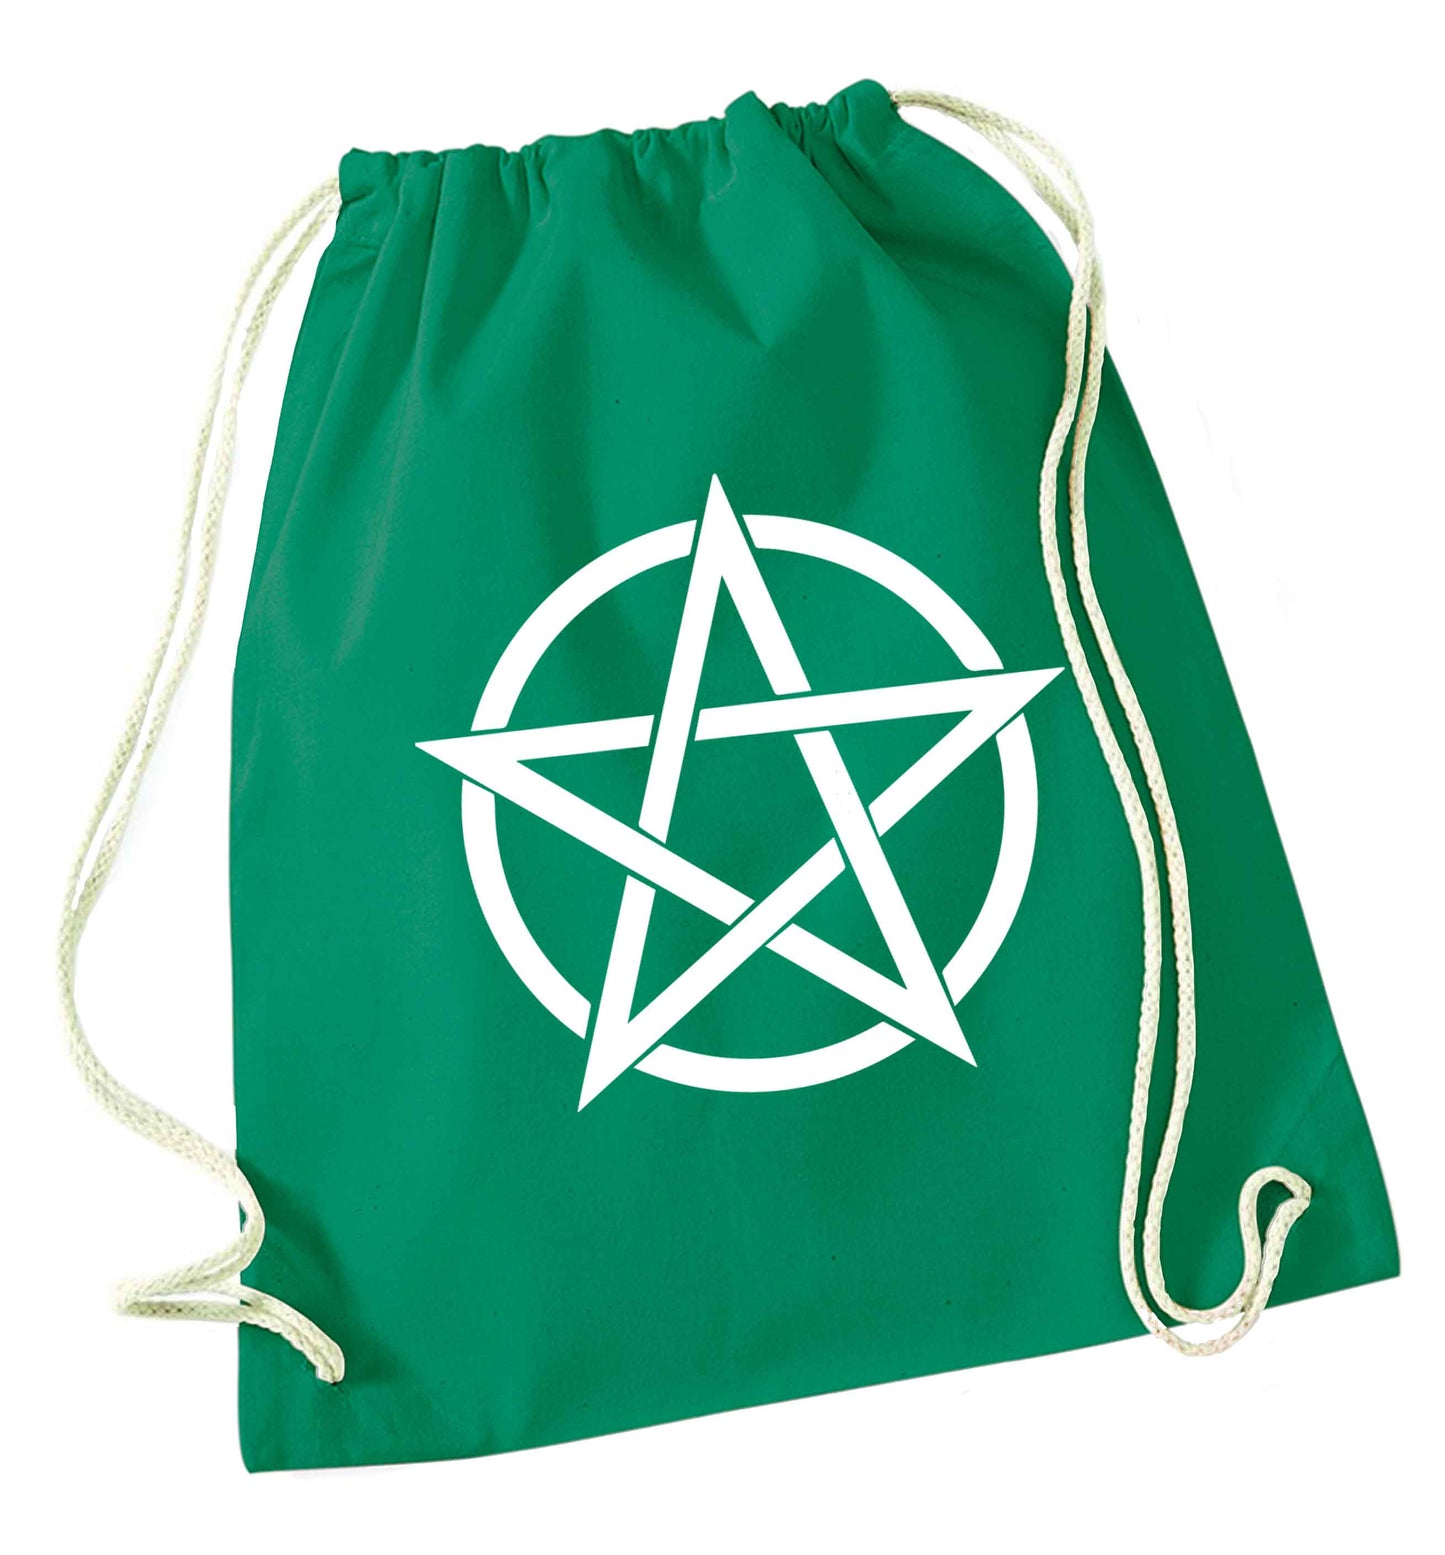 Pentagram symbol green drawstring bag